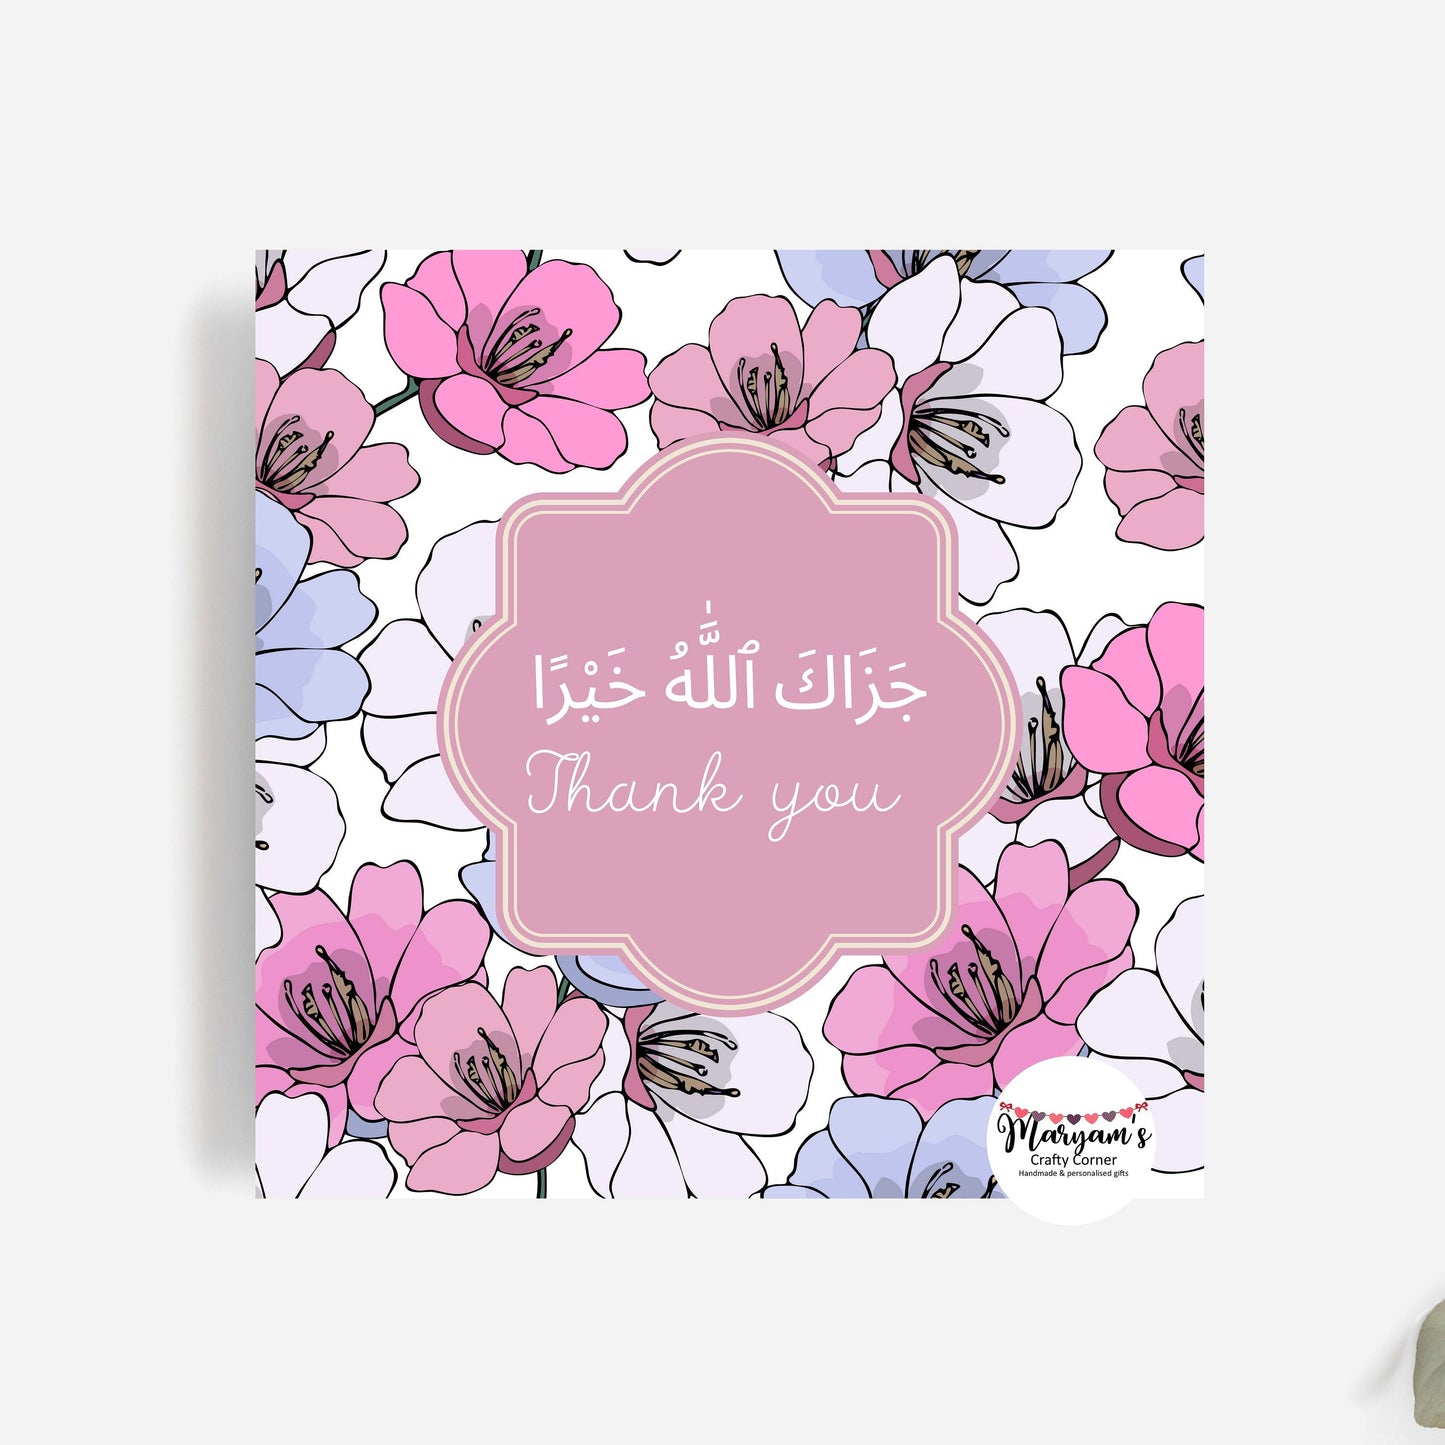 Jazak Allah Khairan, Islamic Greeting card saying Thank you in purple floral background